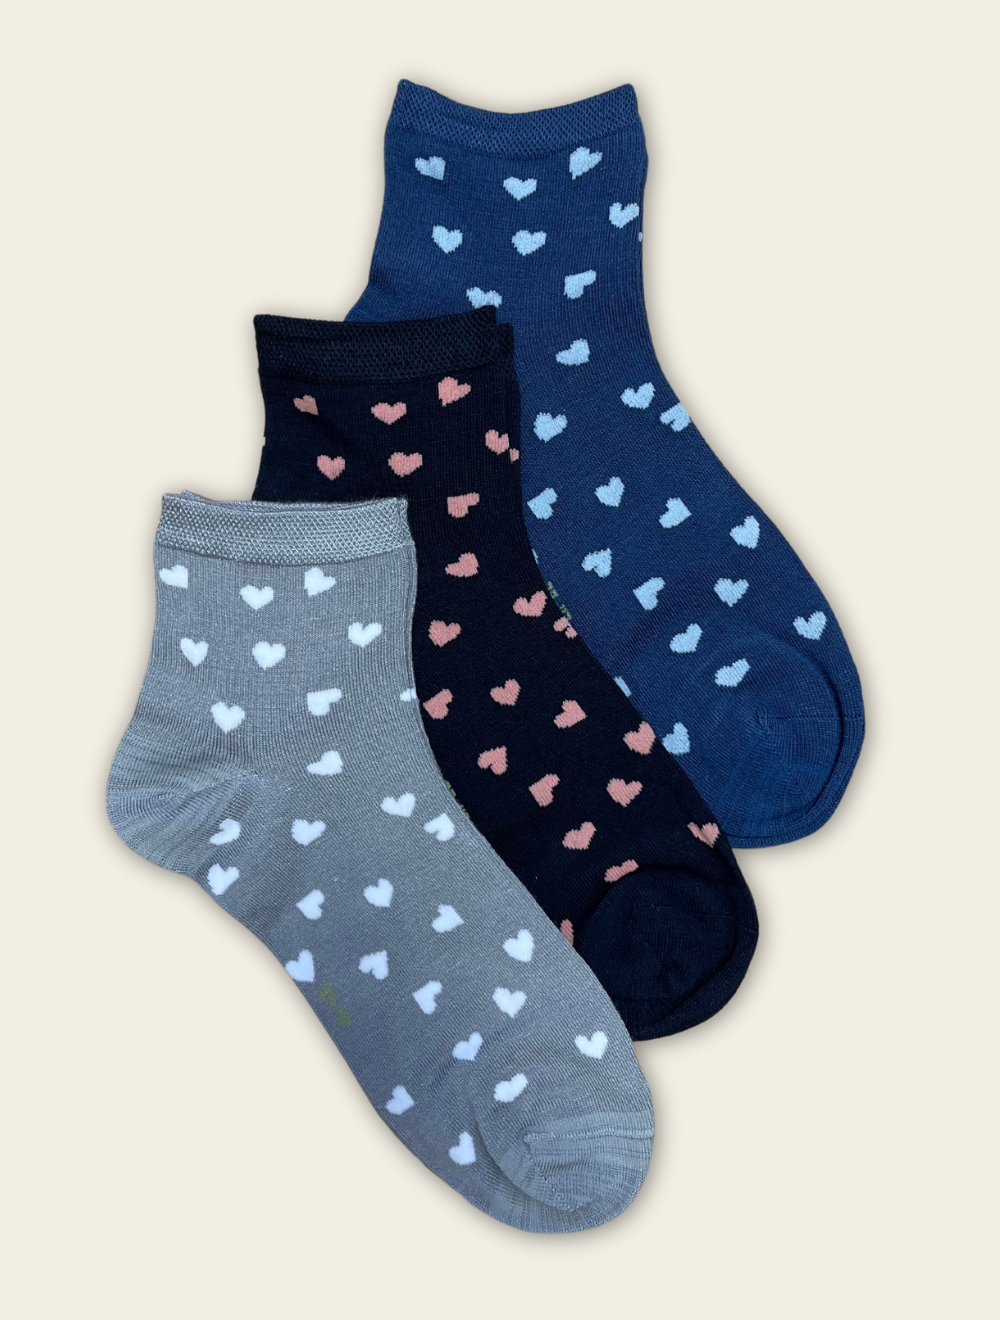 Seamless Bamboo Socks with hearts - 6 pairs